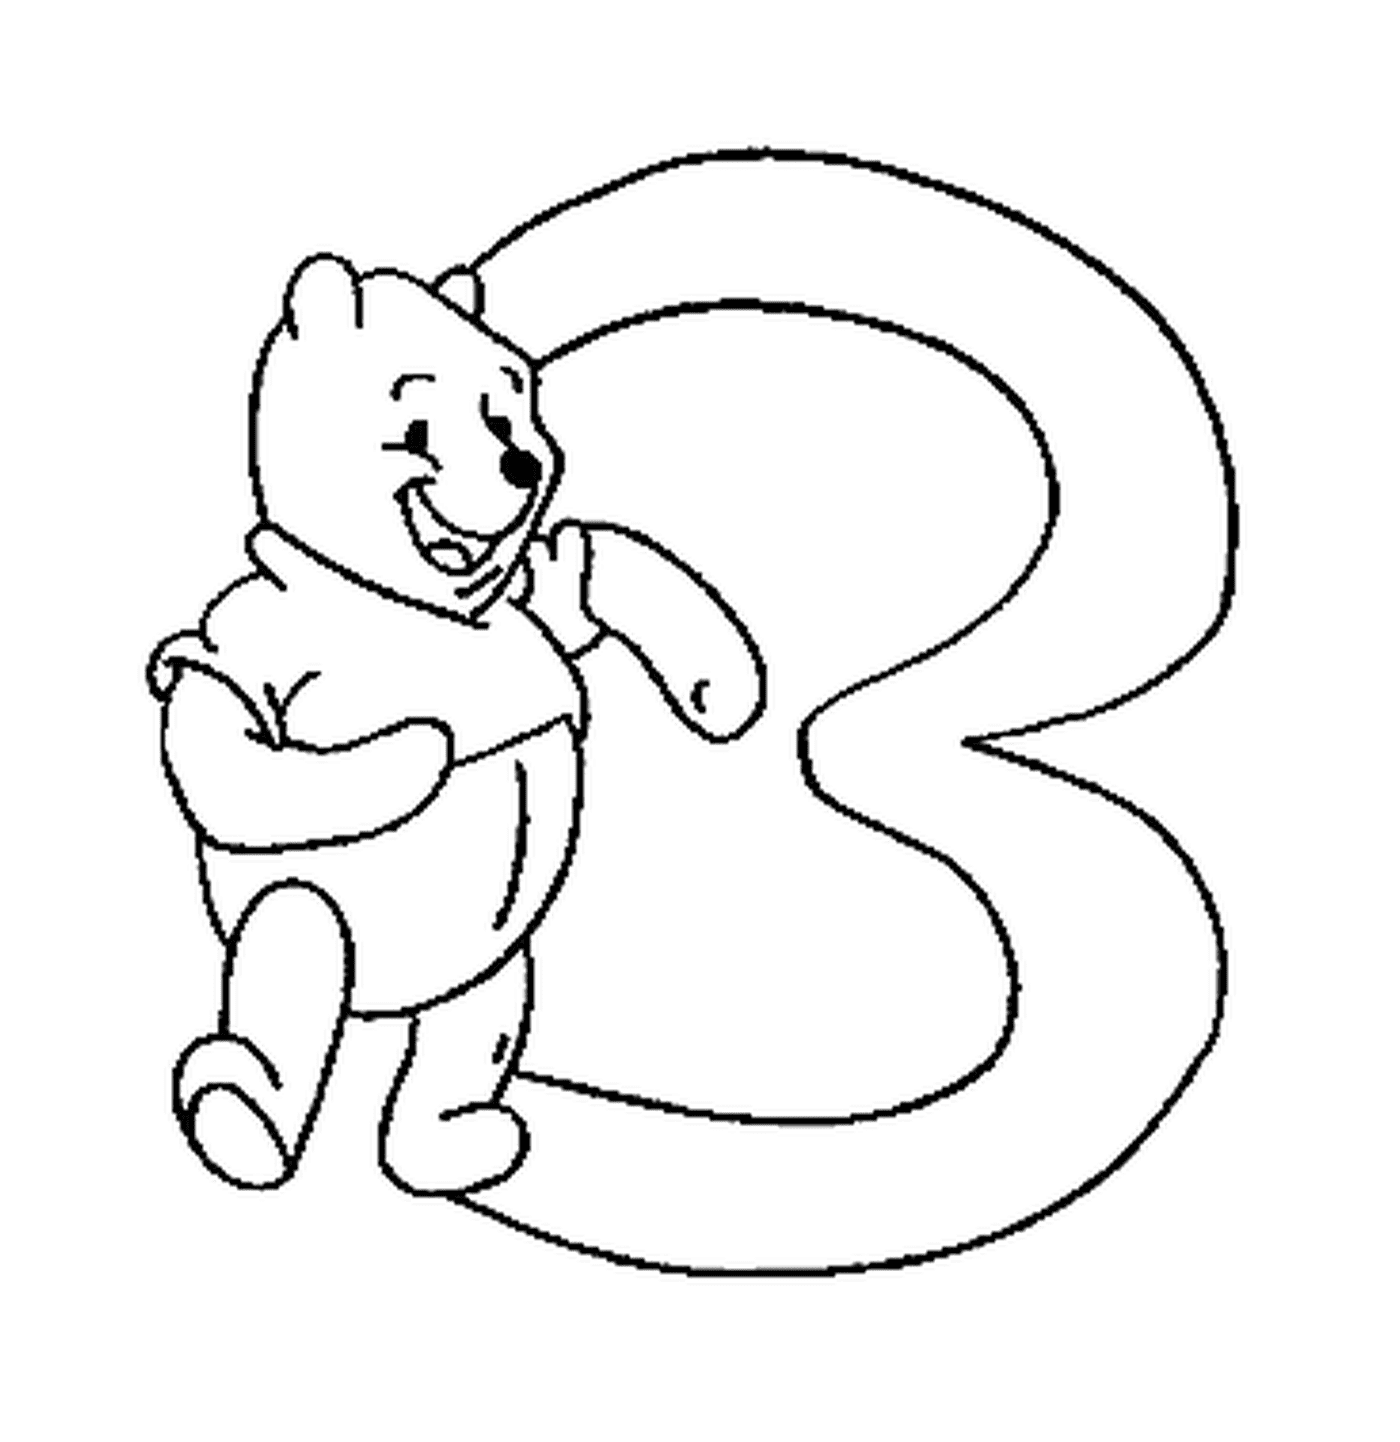 coloriage Le chiffre 3 avec Winnie l ourson